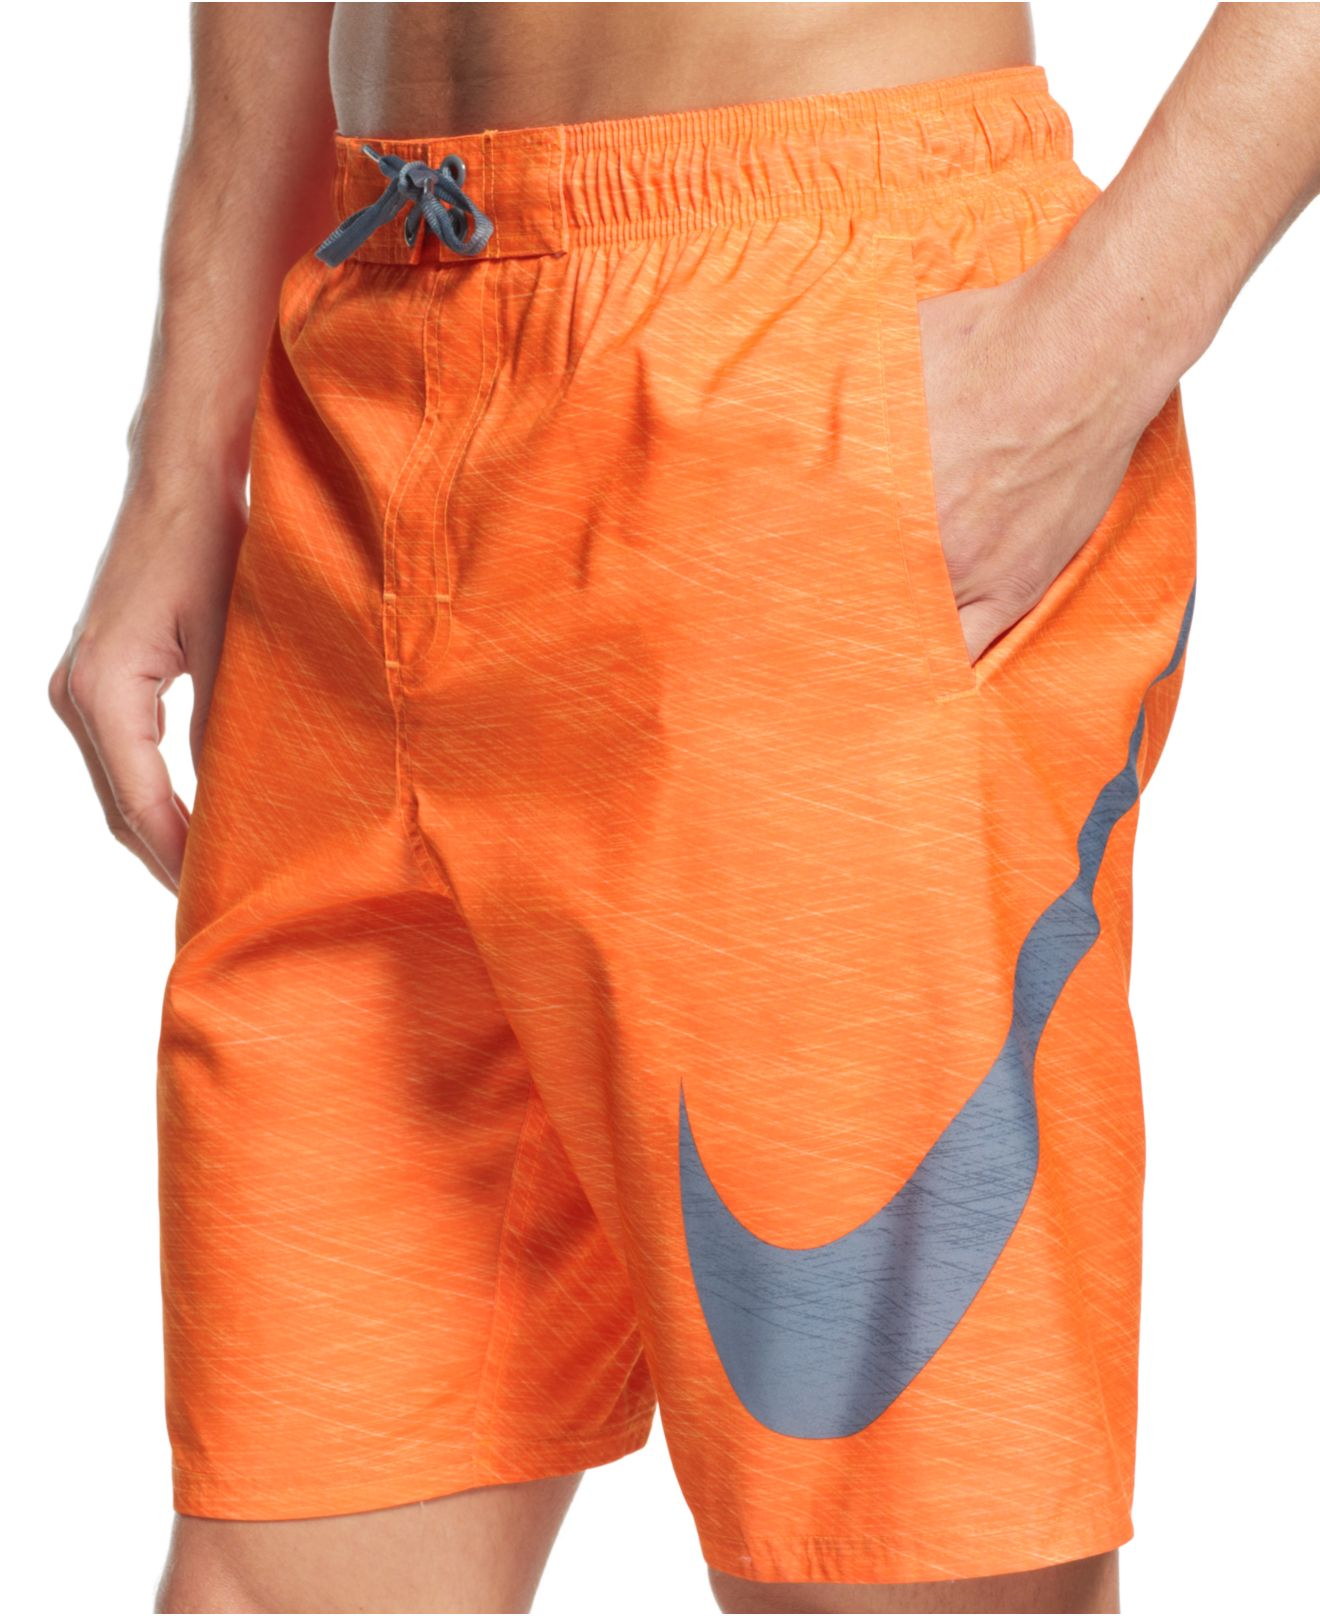 orange nike swim trunks